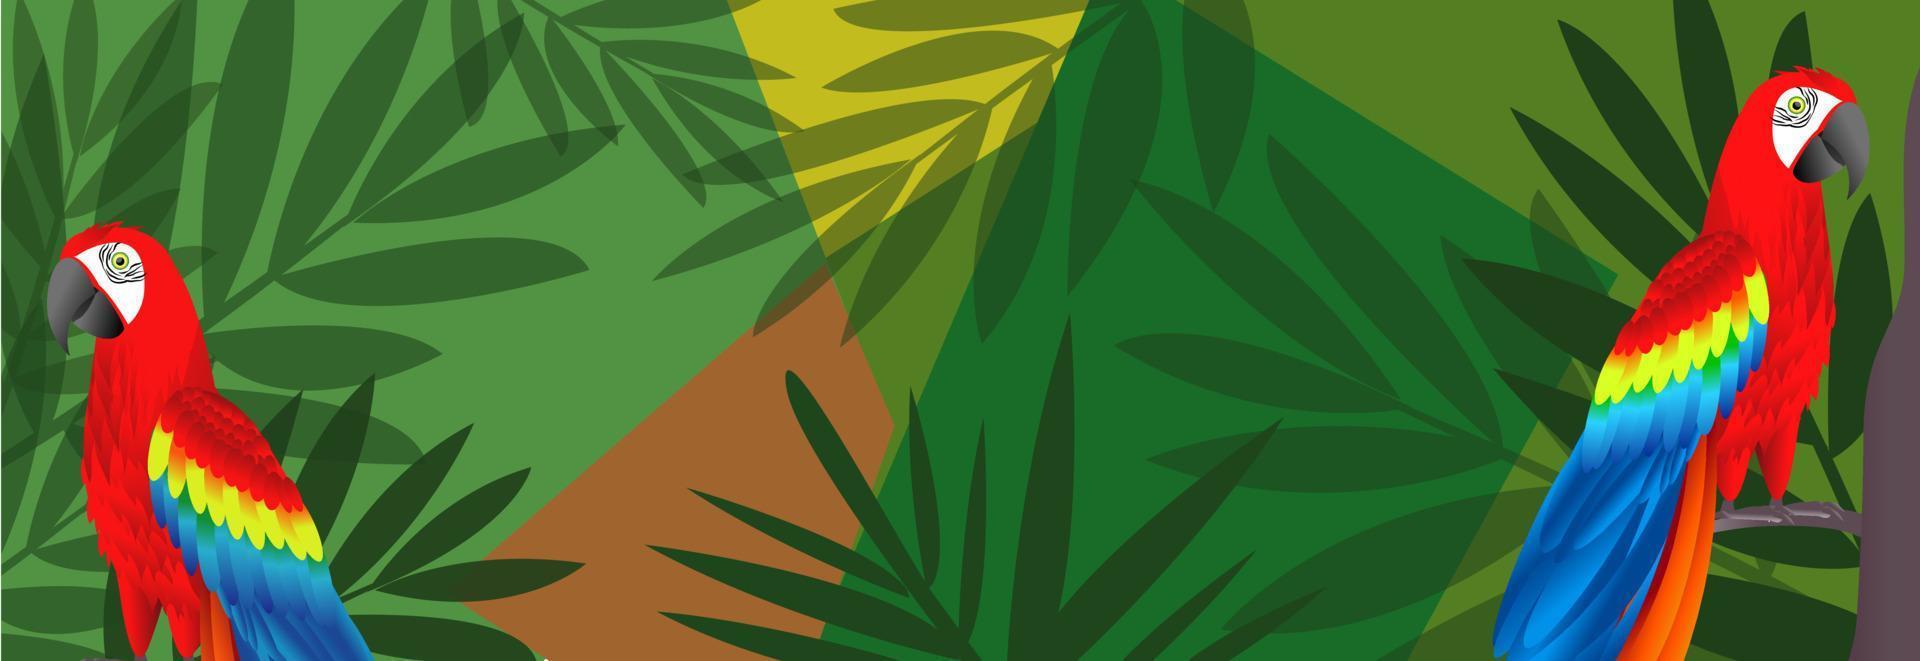 Amazon jungle parrot background beautiful illustration vector